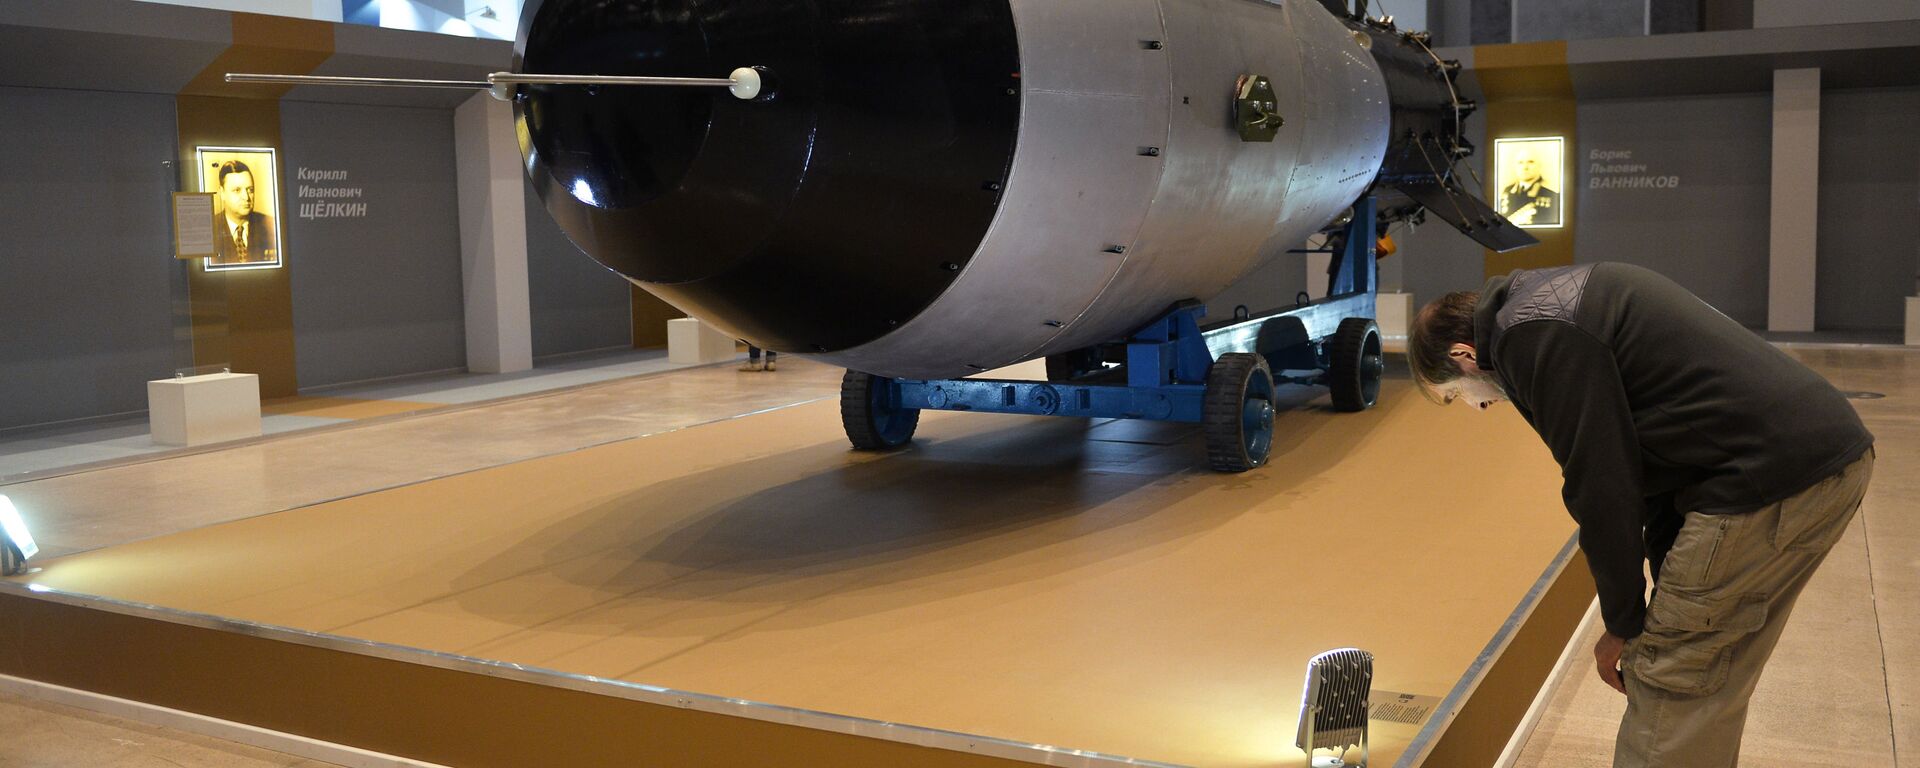 Копия водородной бомбы АН - 602 Царь-бомба - Sputnik Արմենիա, 1920, 13.03.2019